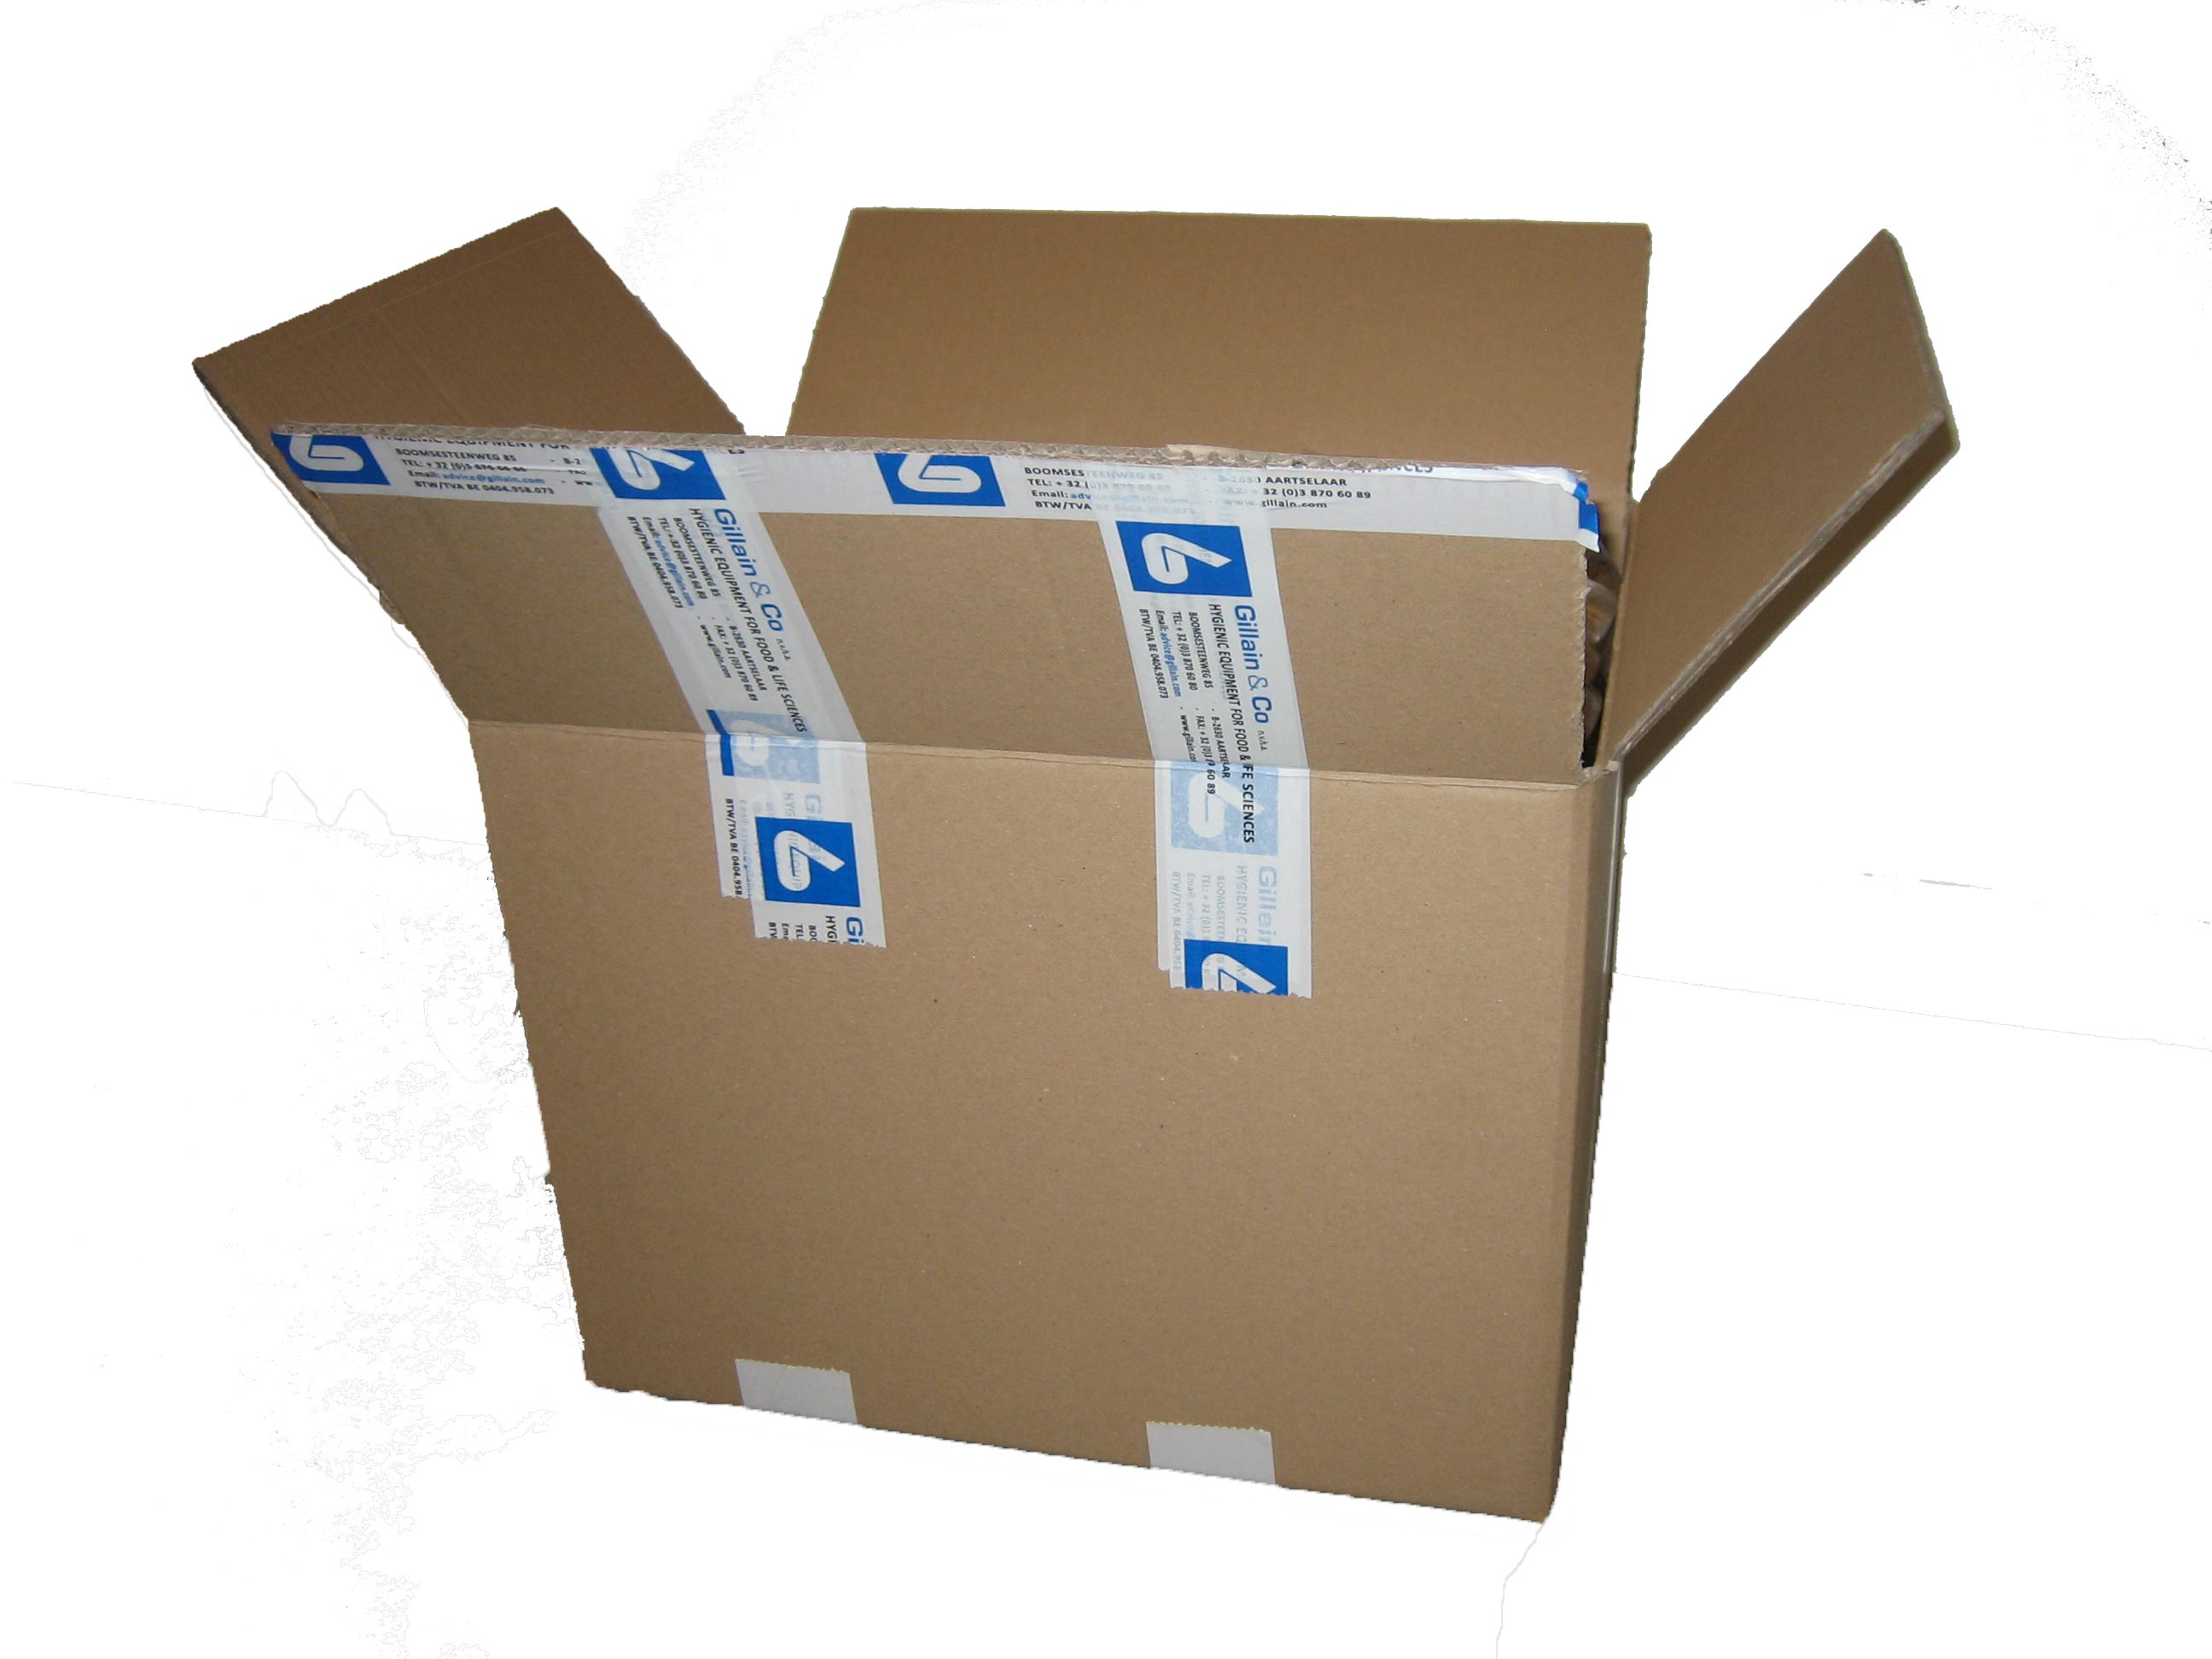 Gillain & Co Verpakking Emballage Packaging